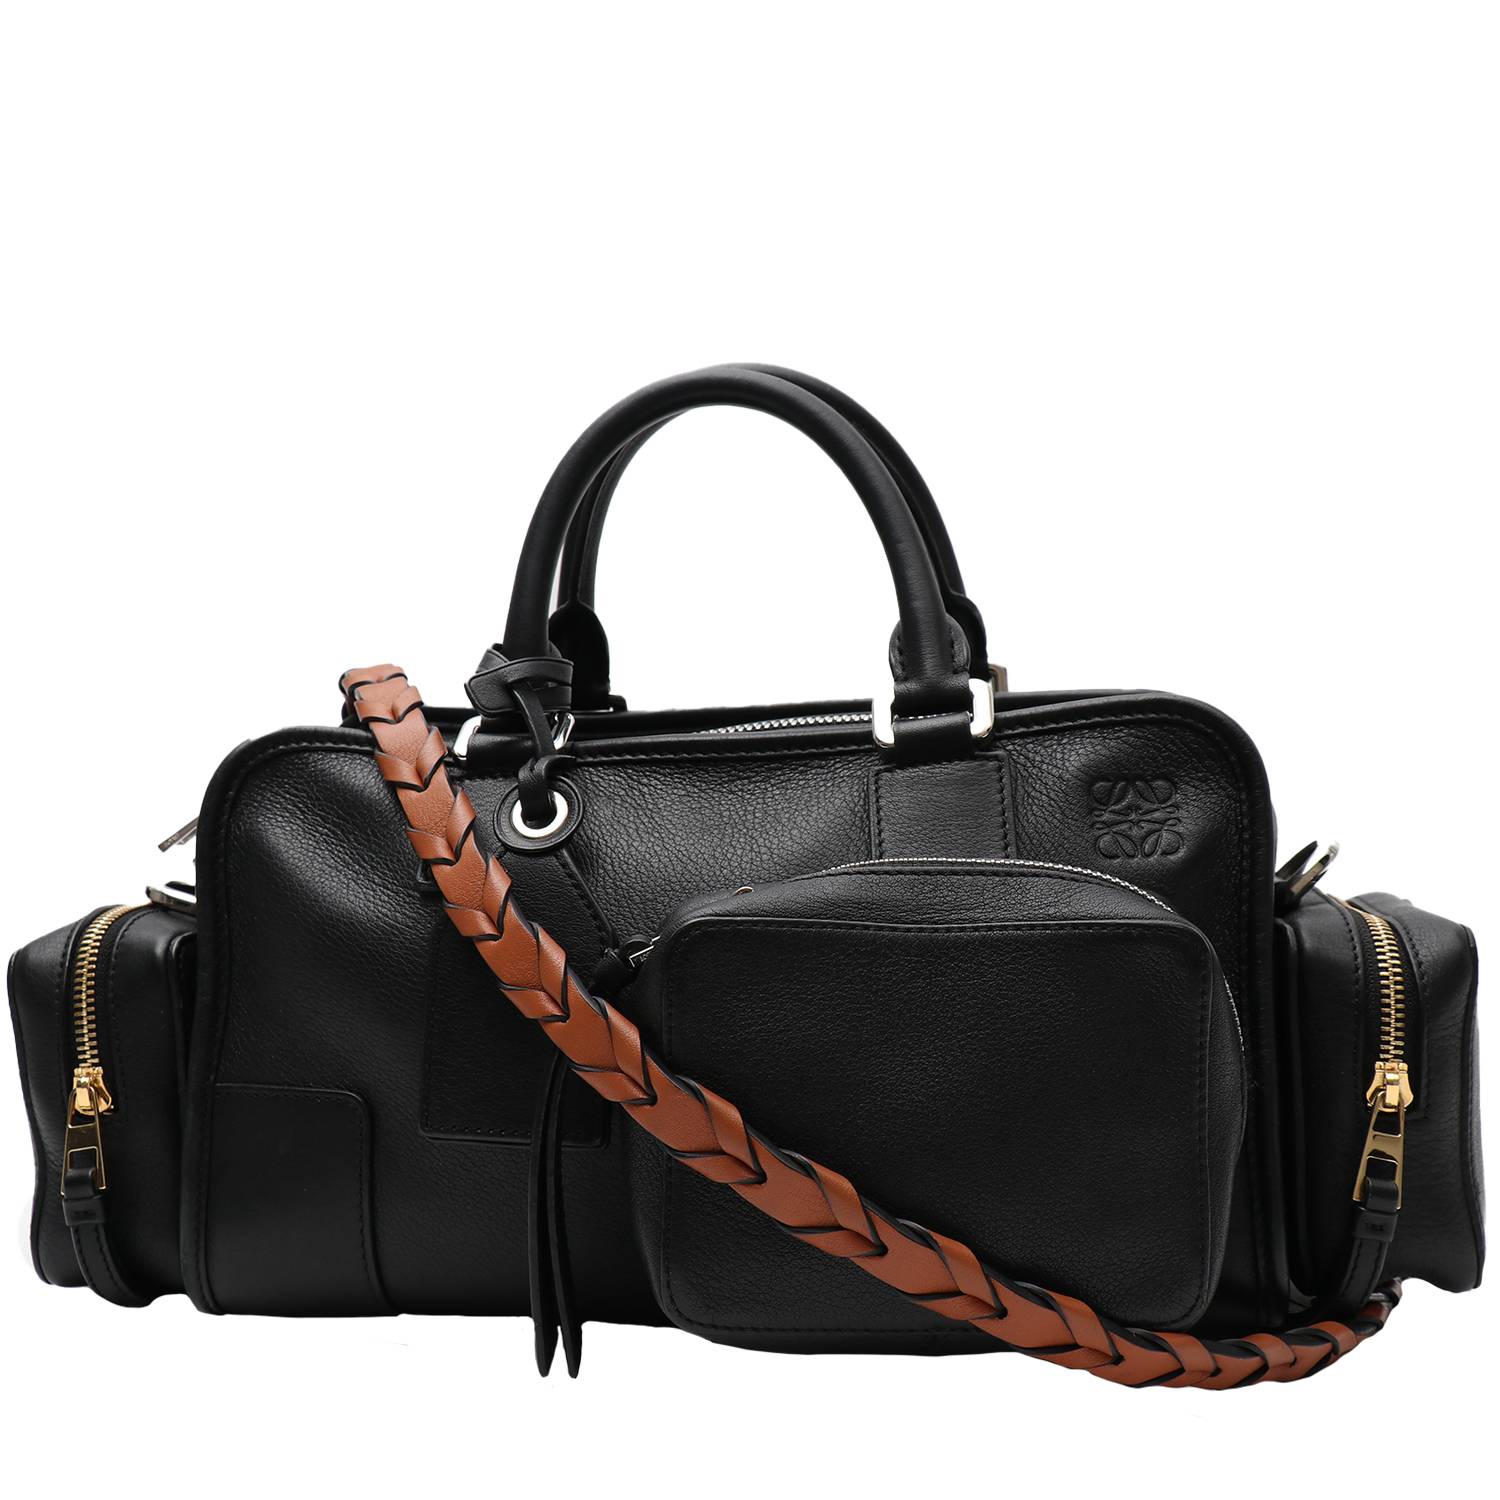 Amazona Handbag In Black Leather